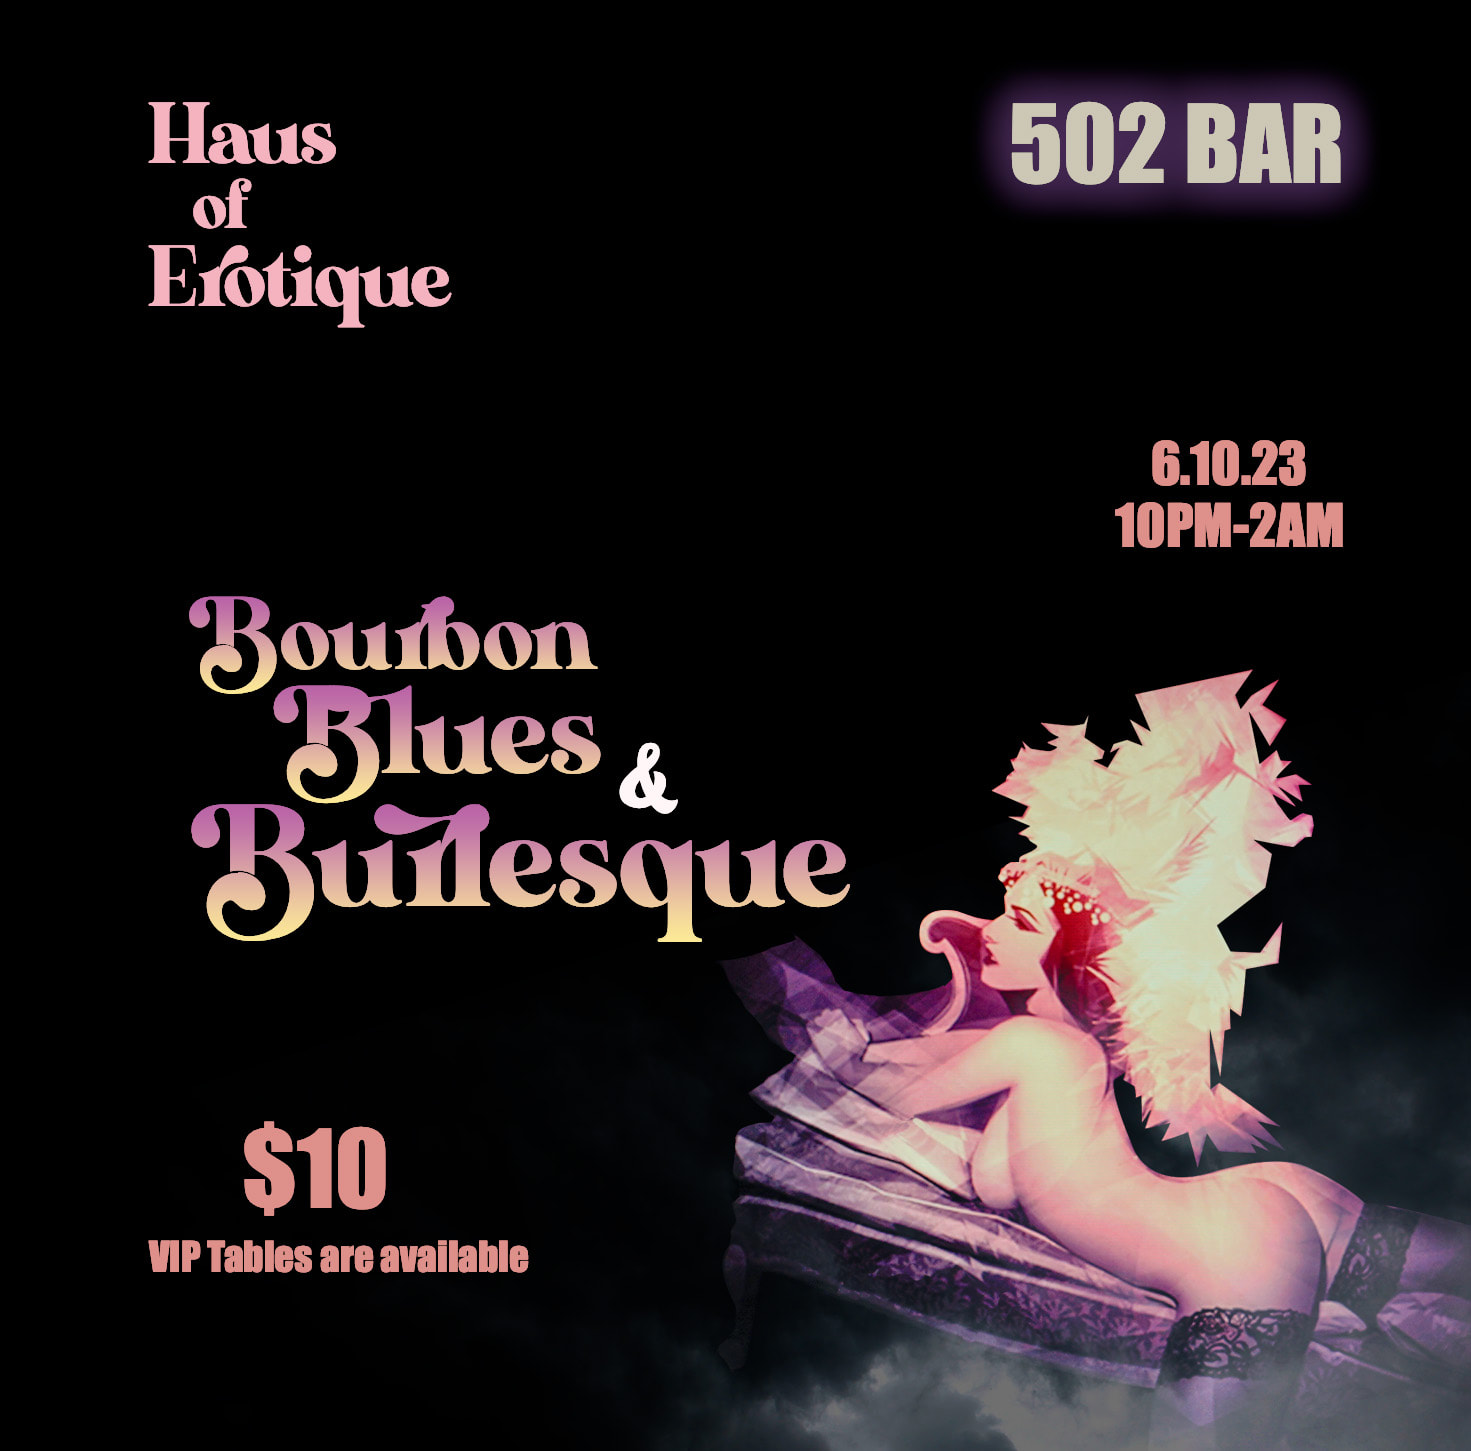 Haus of Erotique at 502 Bar